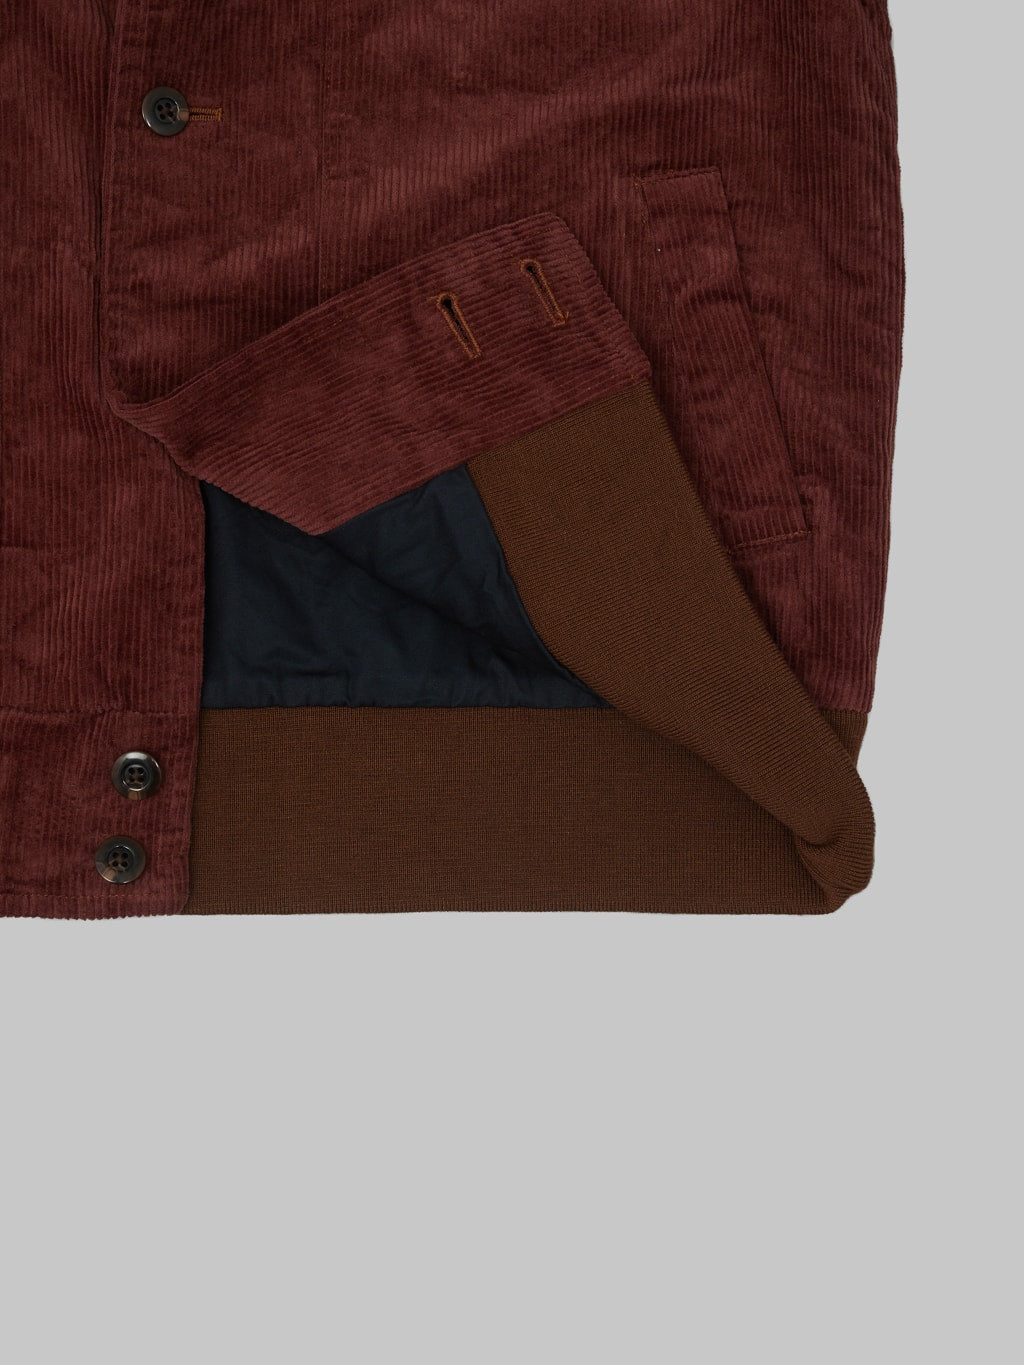 Tanuki Sazanami Corduro mud Dyed brown Jacket interior fabric